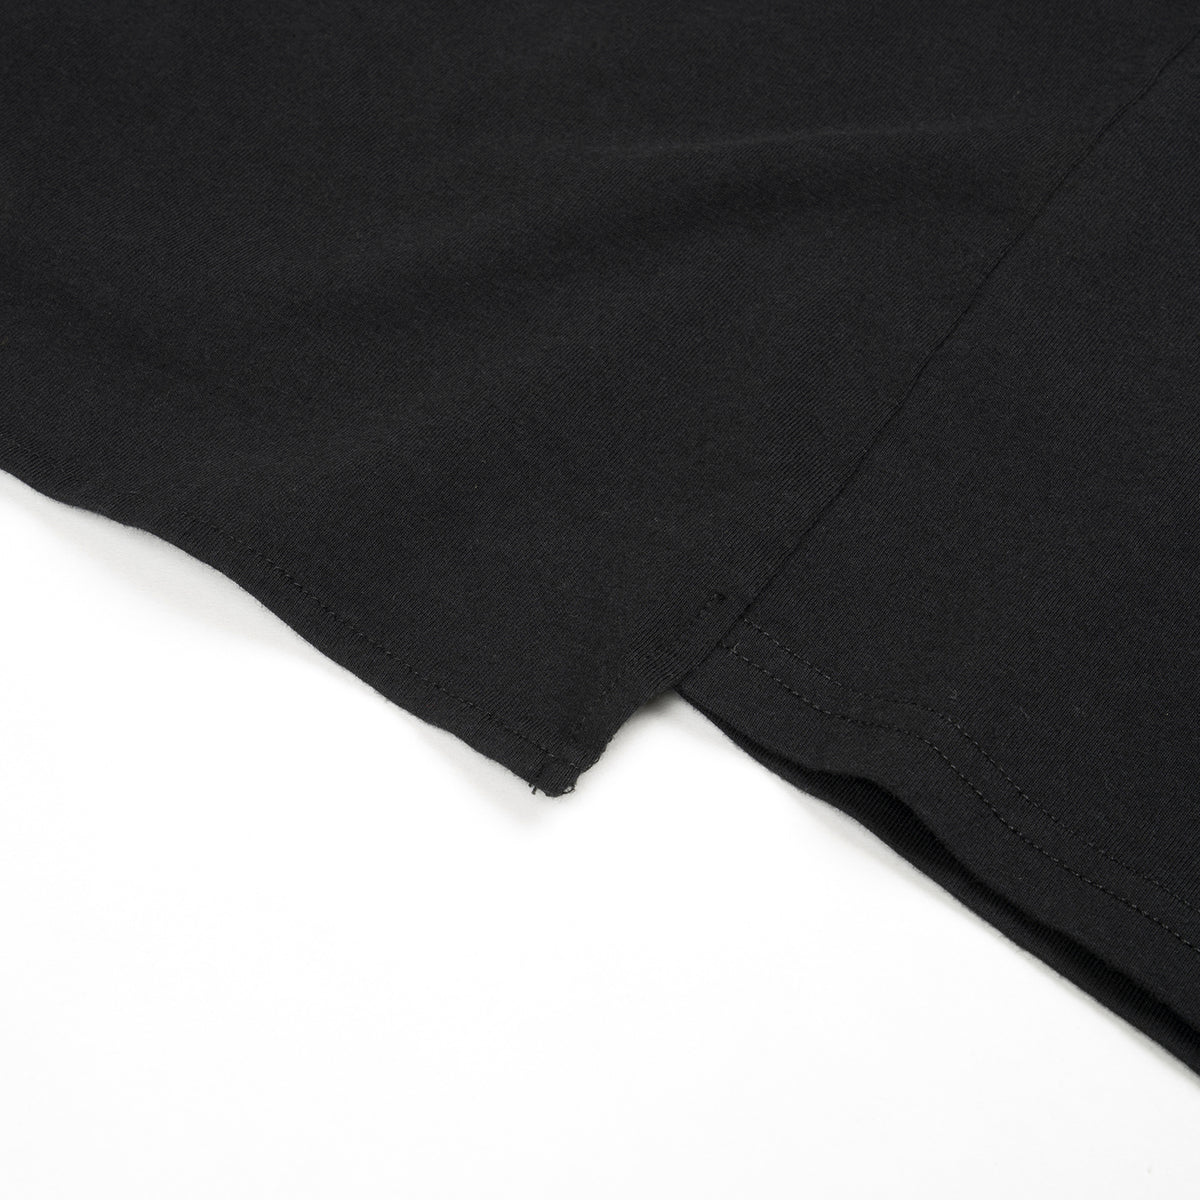 OAKLEY by Samuel Ross | Block L/S T-Shirt Black - Concrete